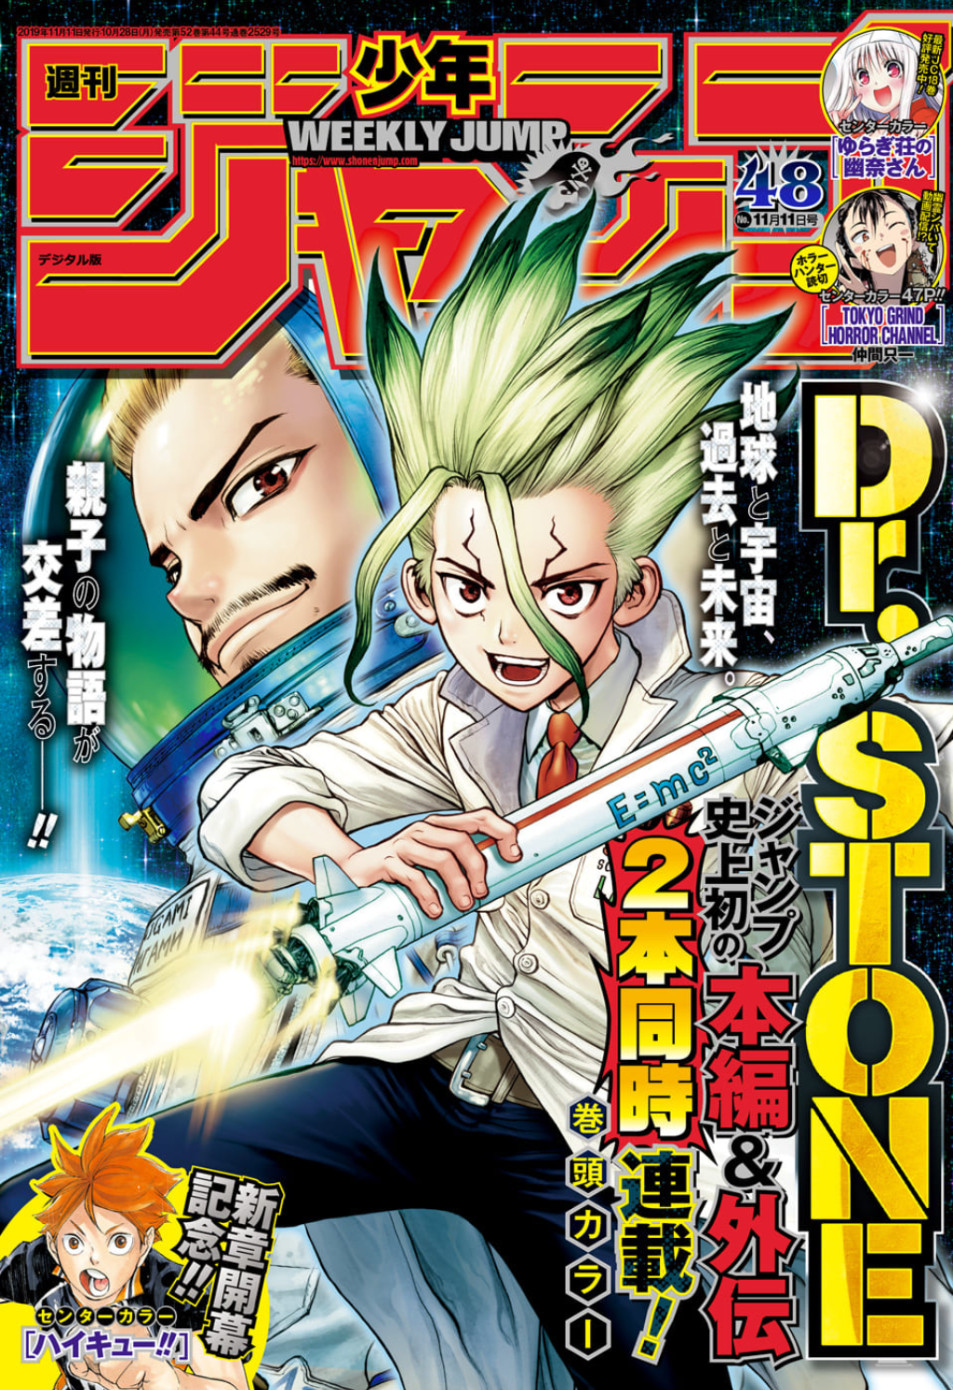 Weekly Shonen Jump Issue 48 19 Jump Database Fandom